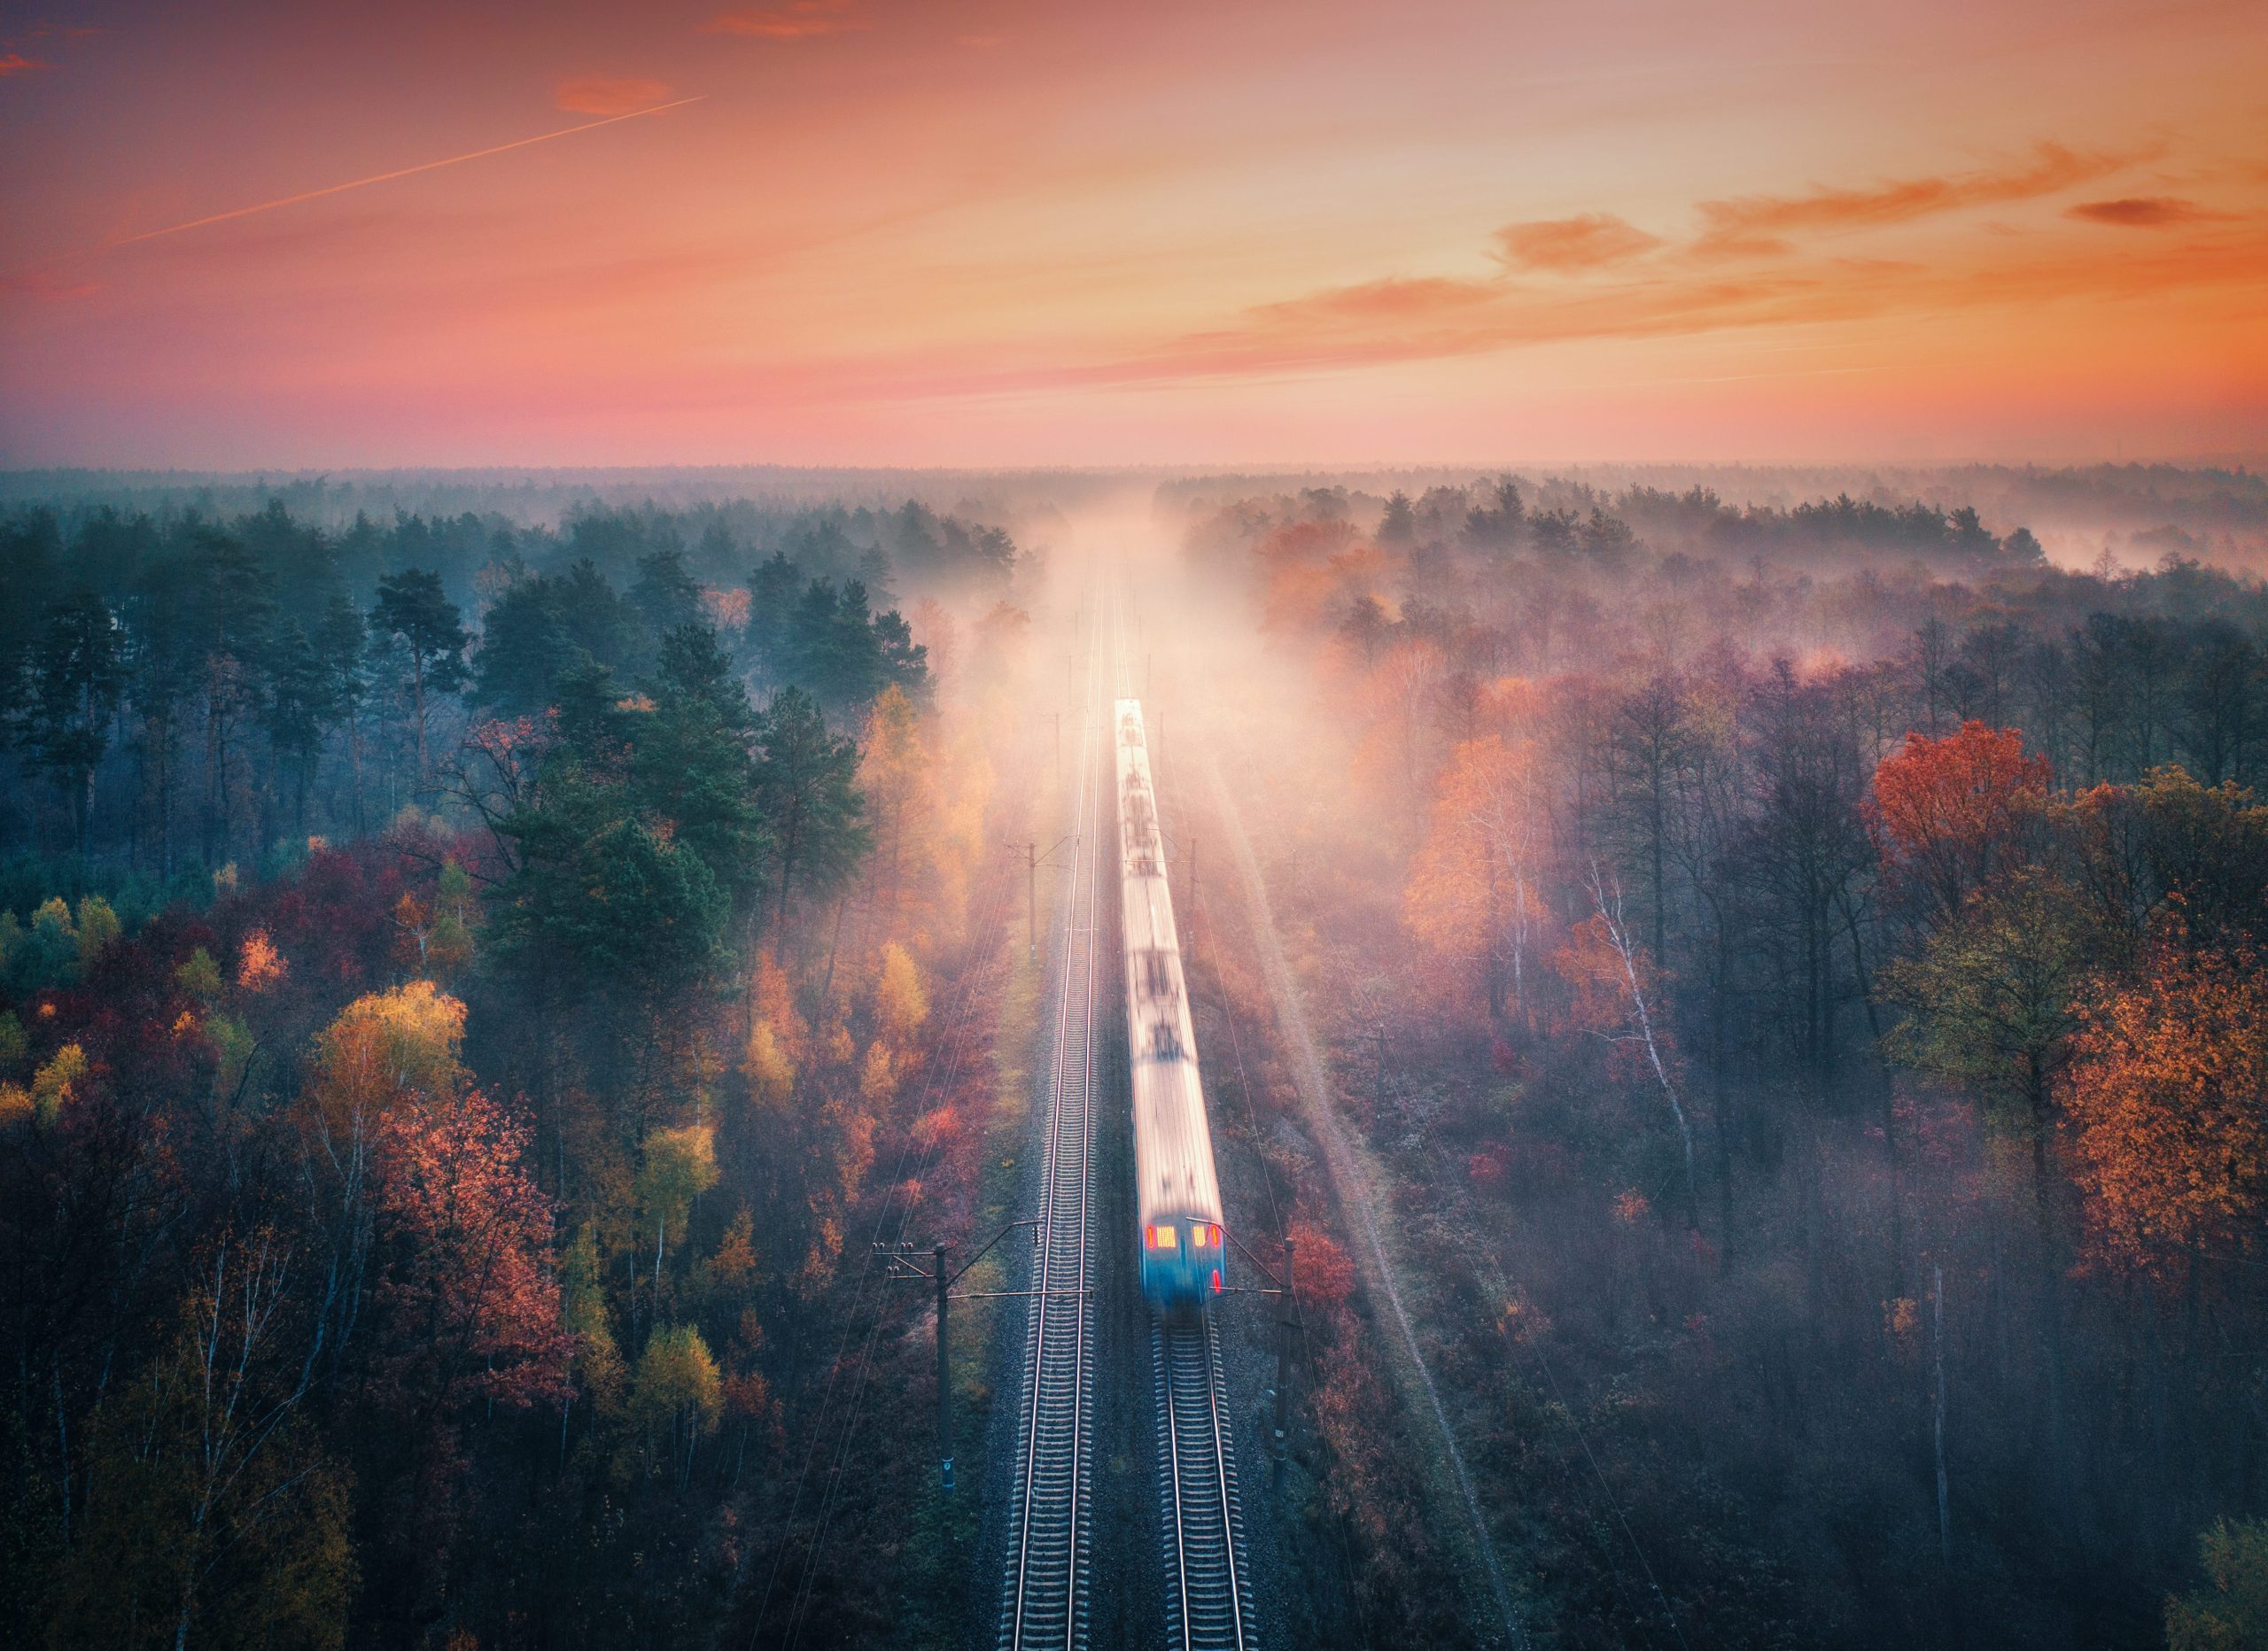 train-in-colorful-forest-in-fog-at-sunri